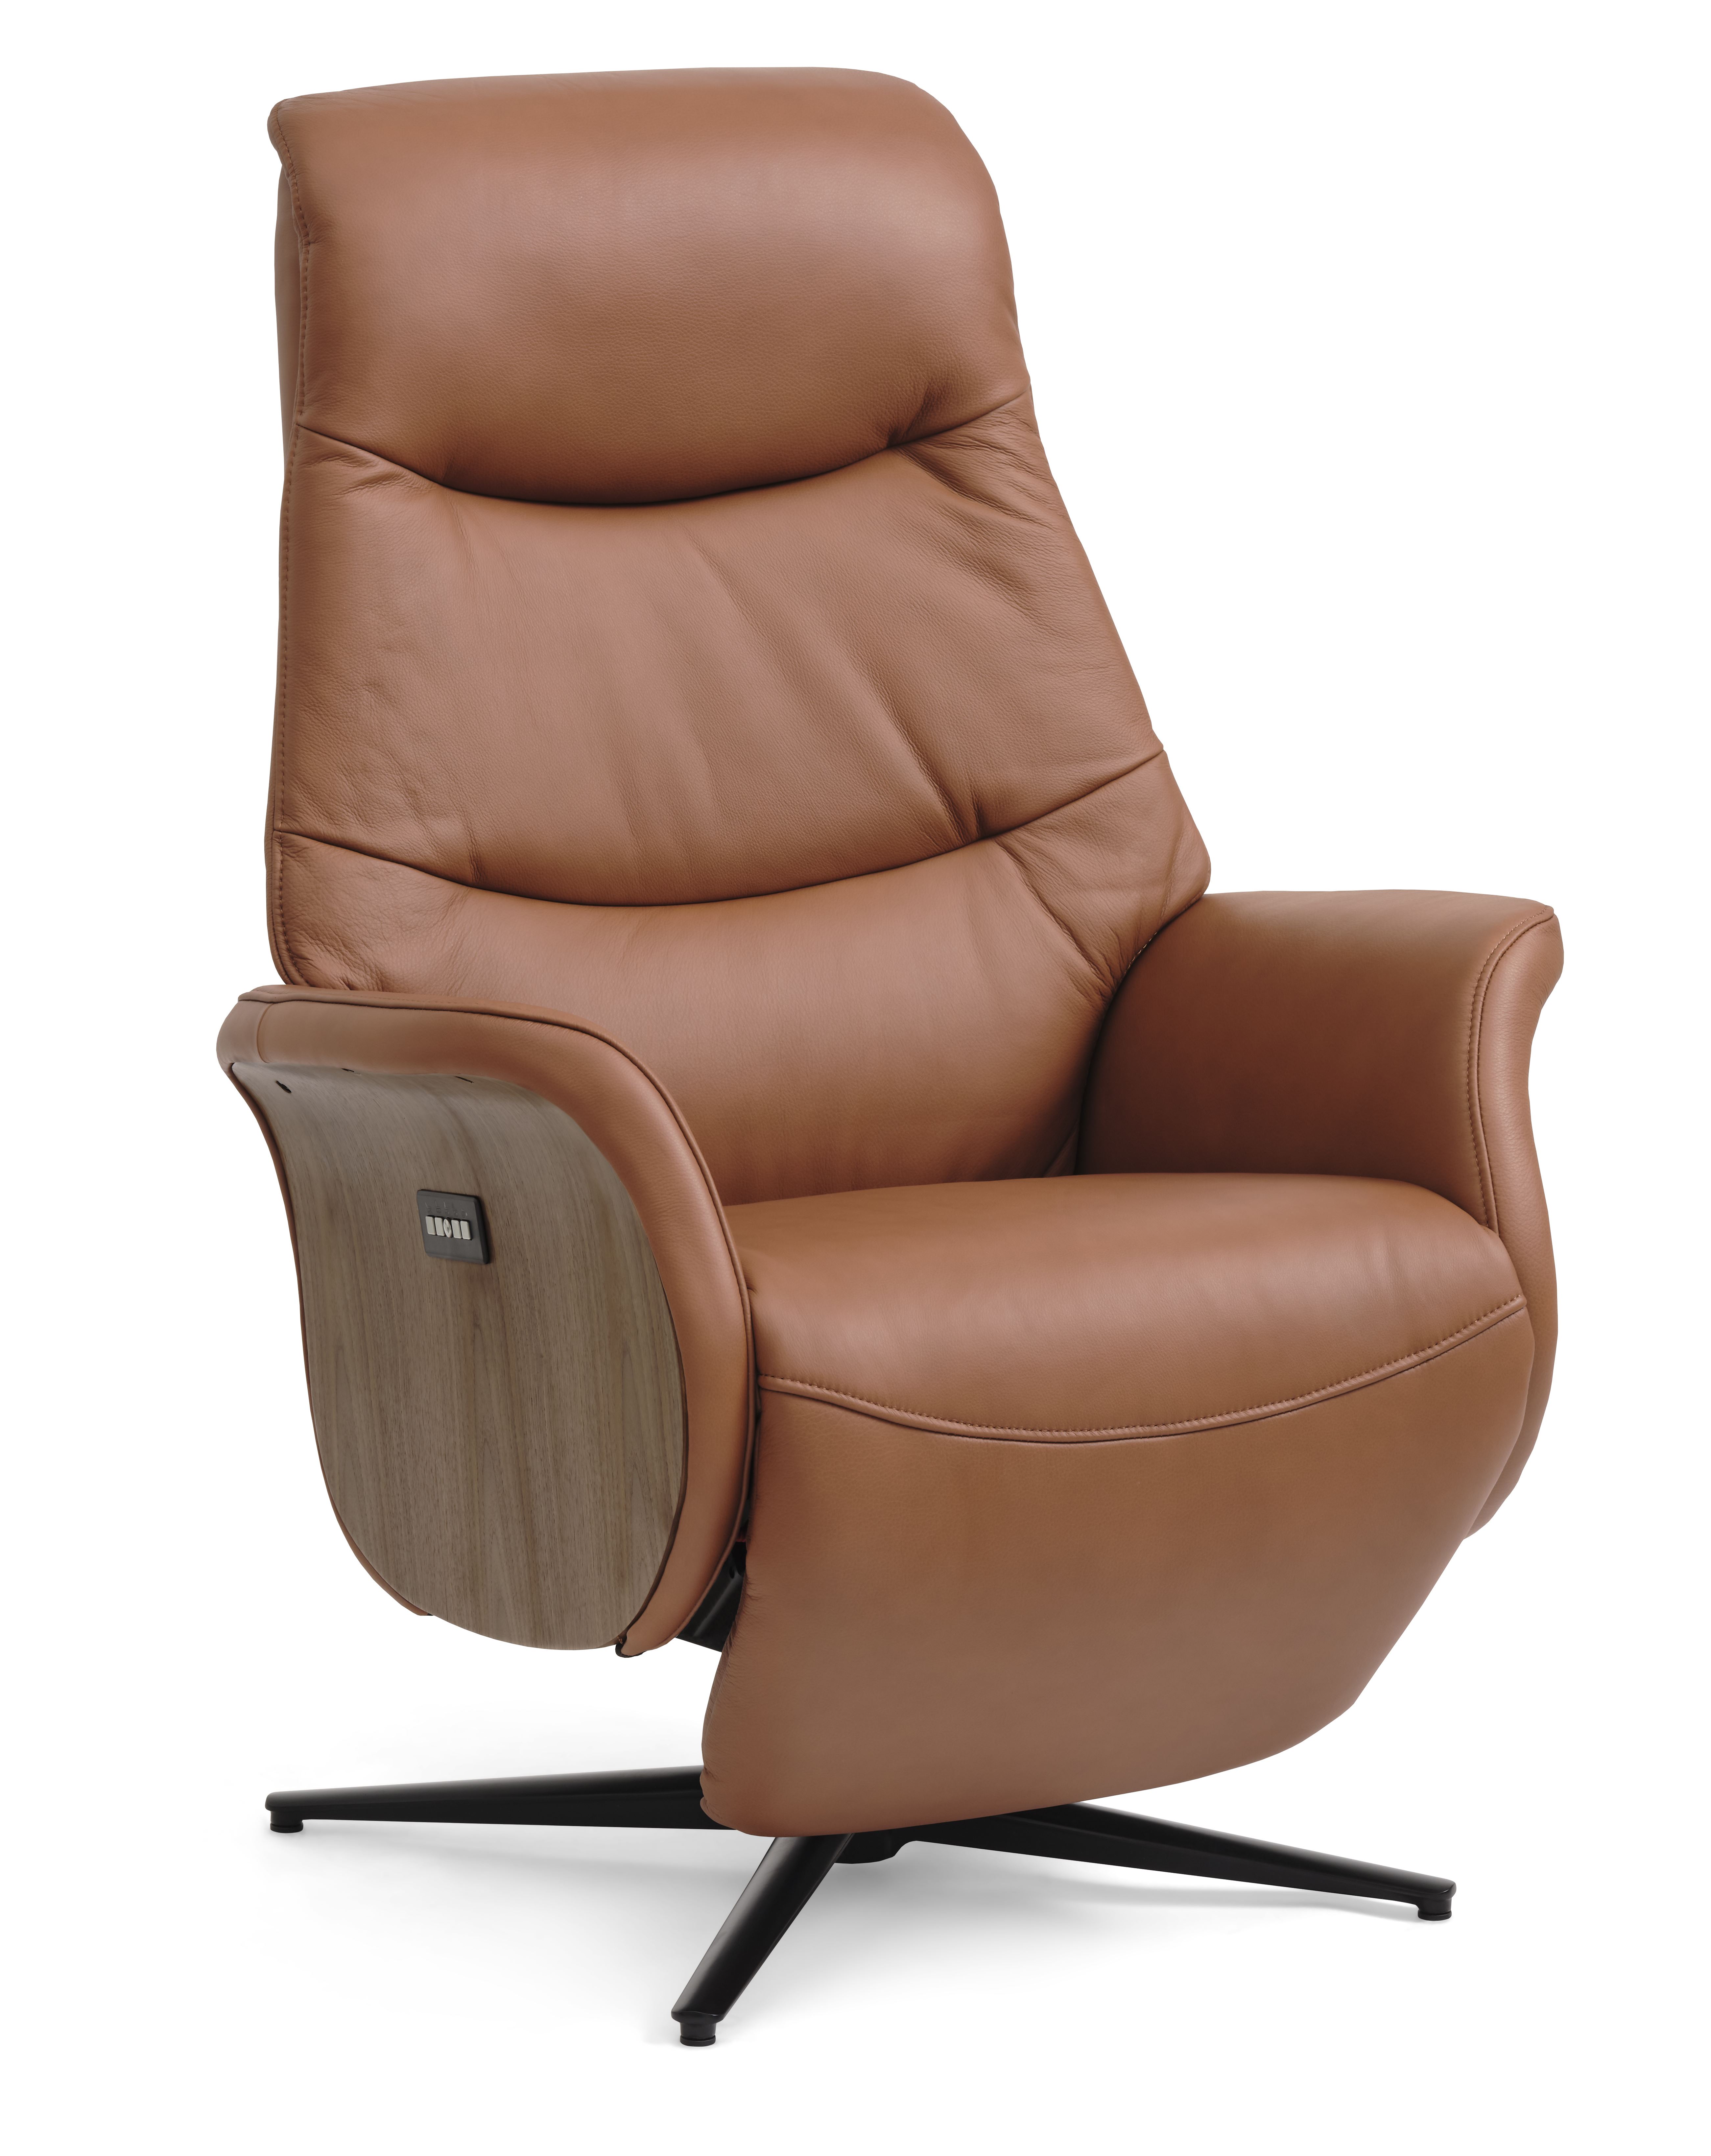 William recliner stol, 2 motorer, armlæn, vippefunktion, fodskammel - cognac semianilin læder/metal